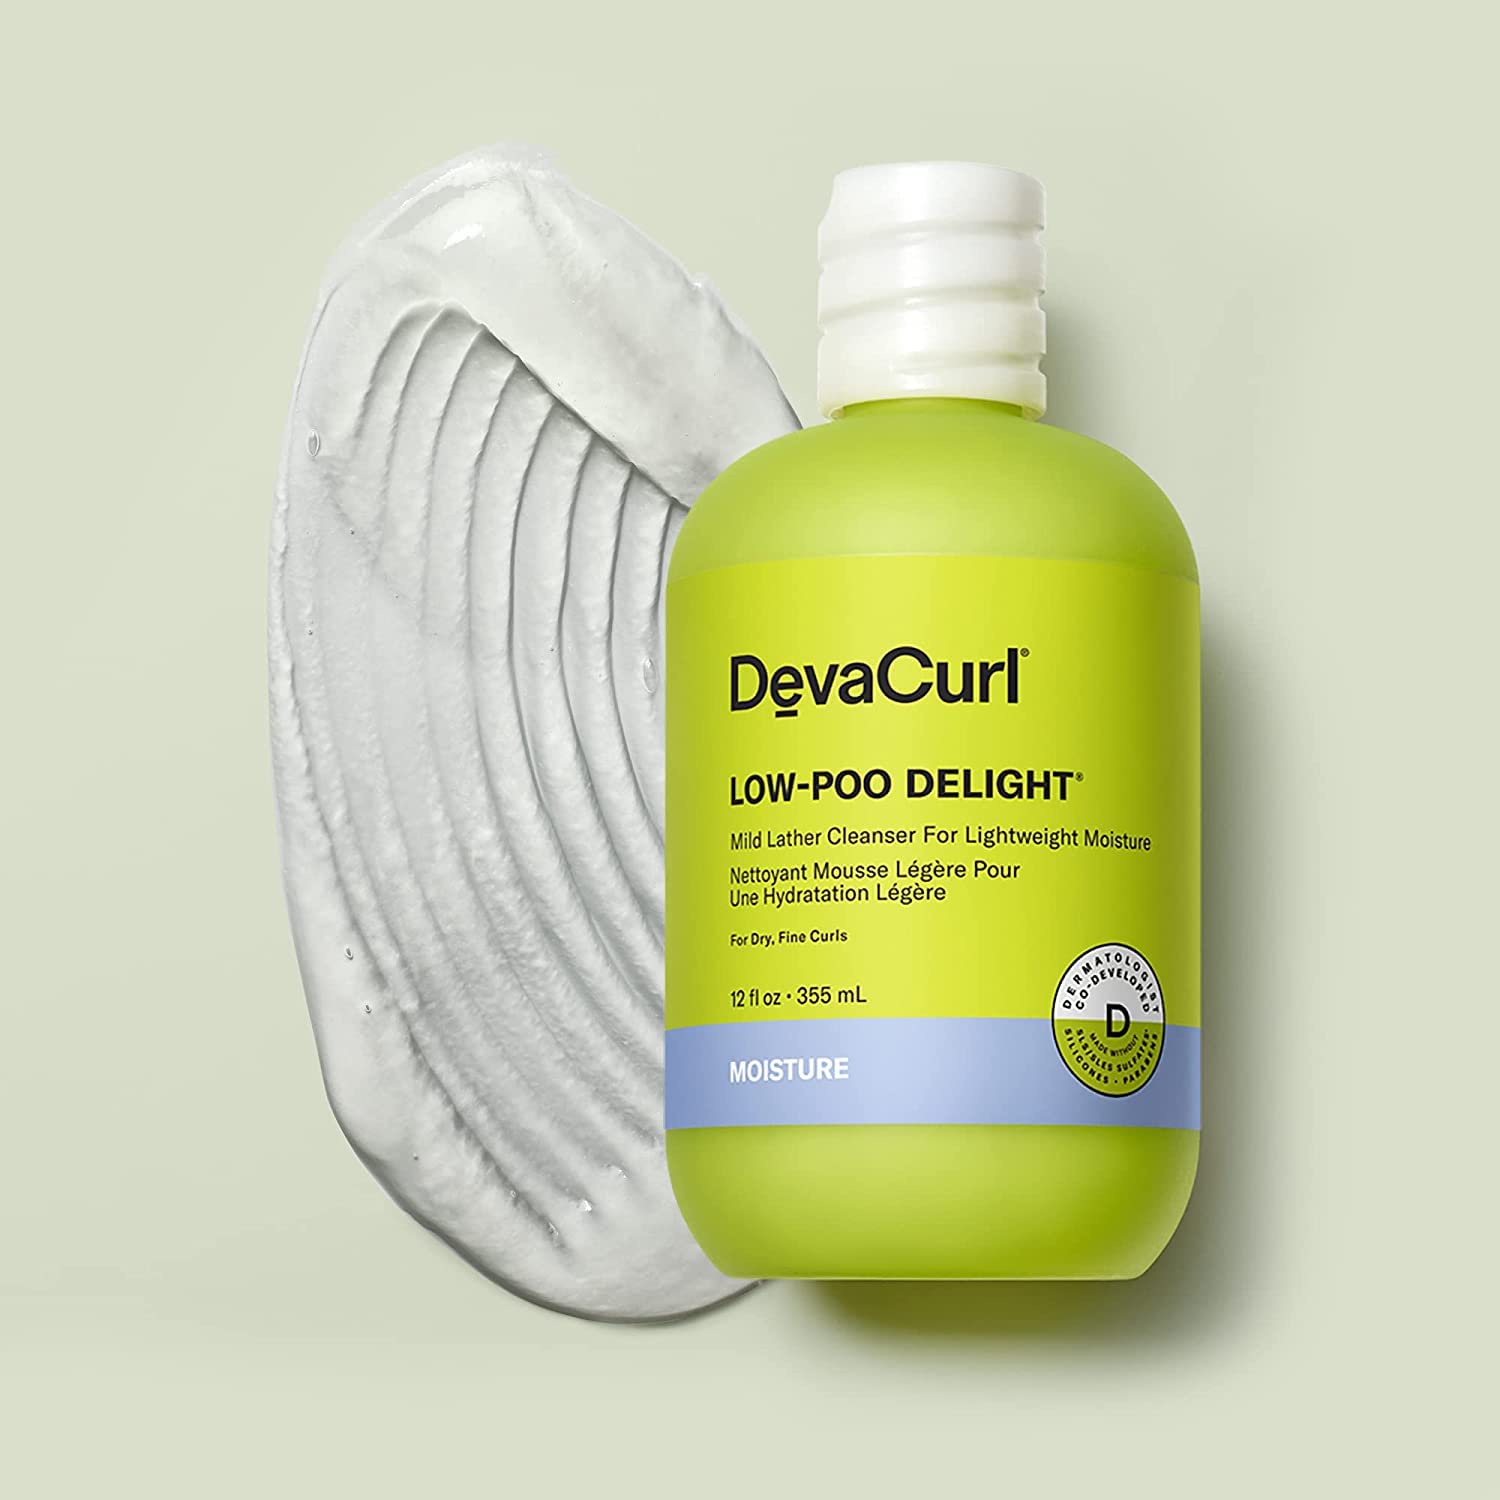 DevaCurl Low-Poo Delight, Mild Lather Cleanser for Lightweight Moisture, 355mL